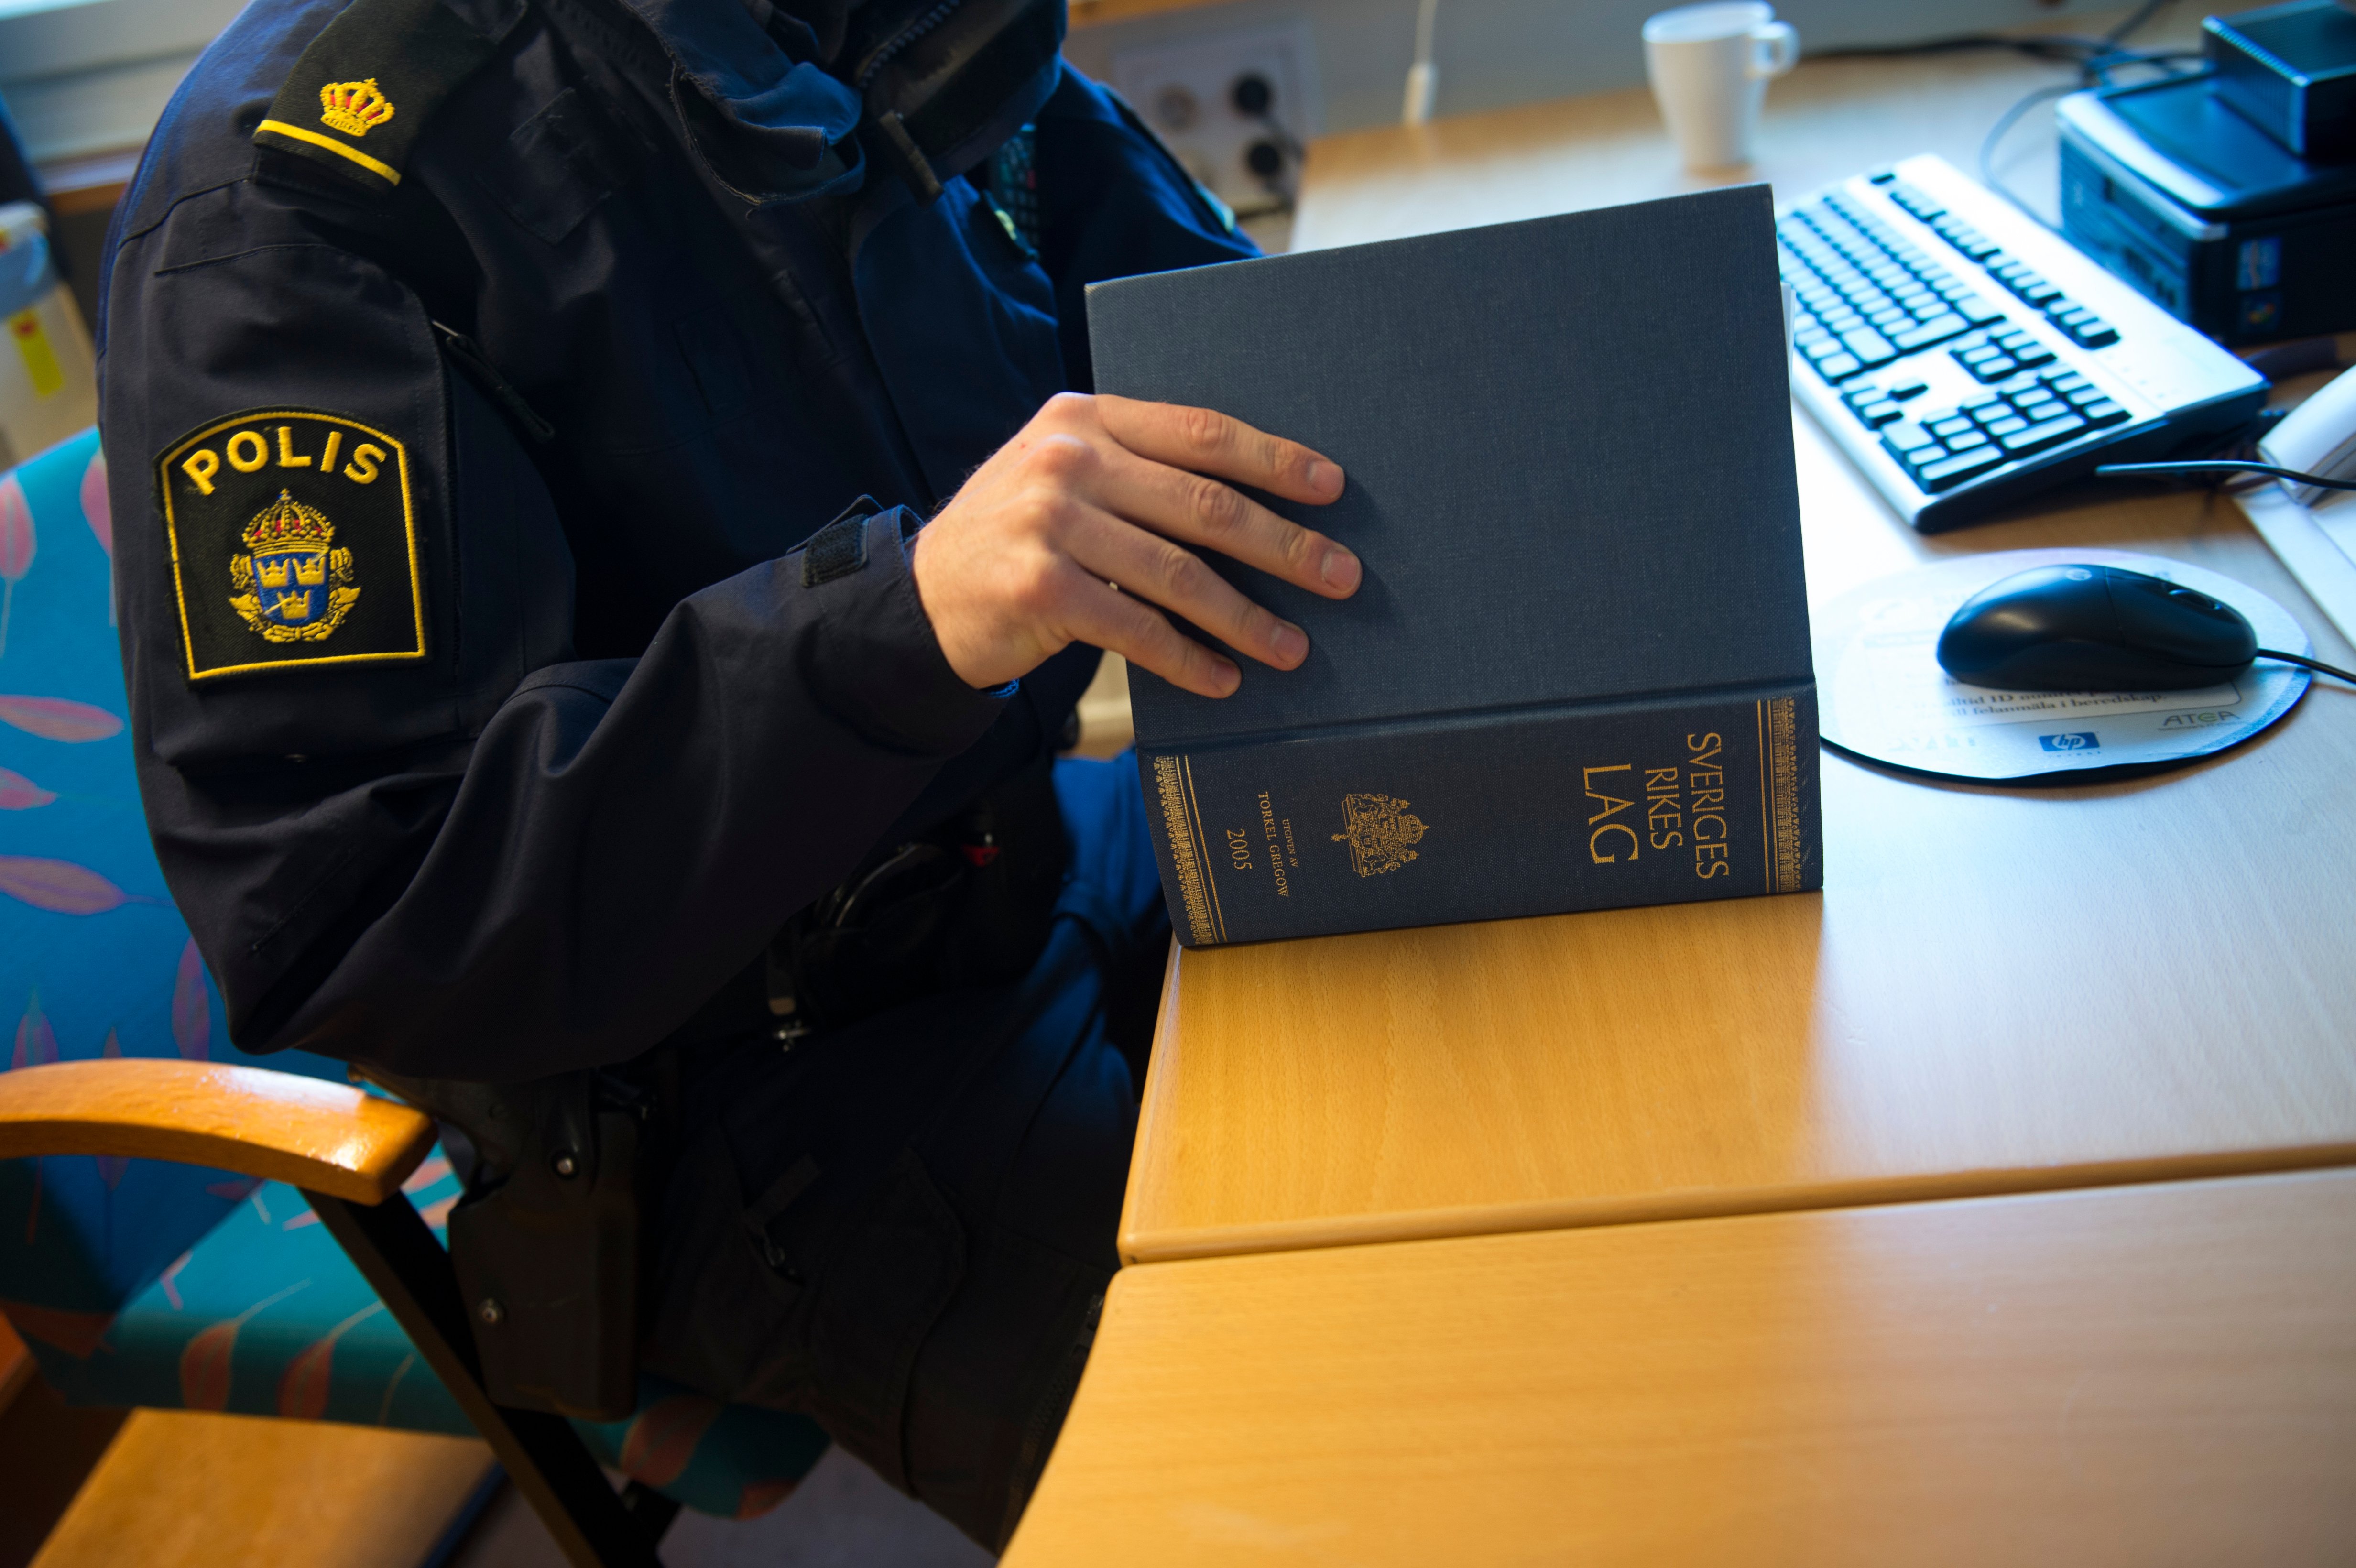 Rikspolisstyrelsens personalansvarsnämnd, Polisen, Polischef, Stold, Örebro